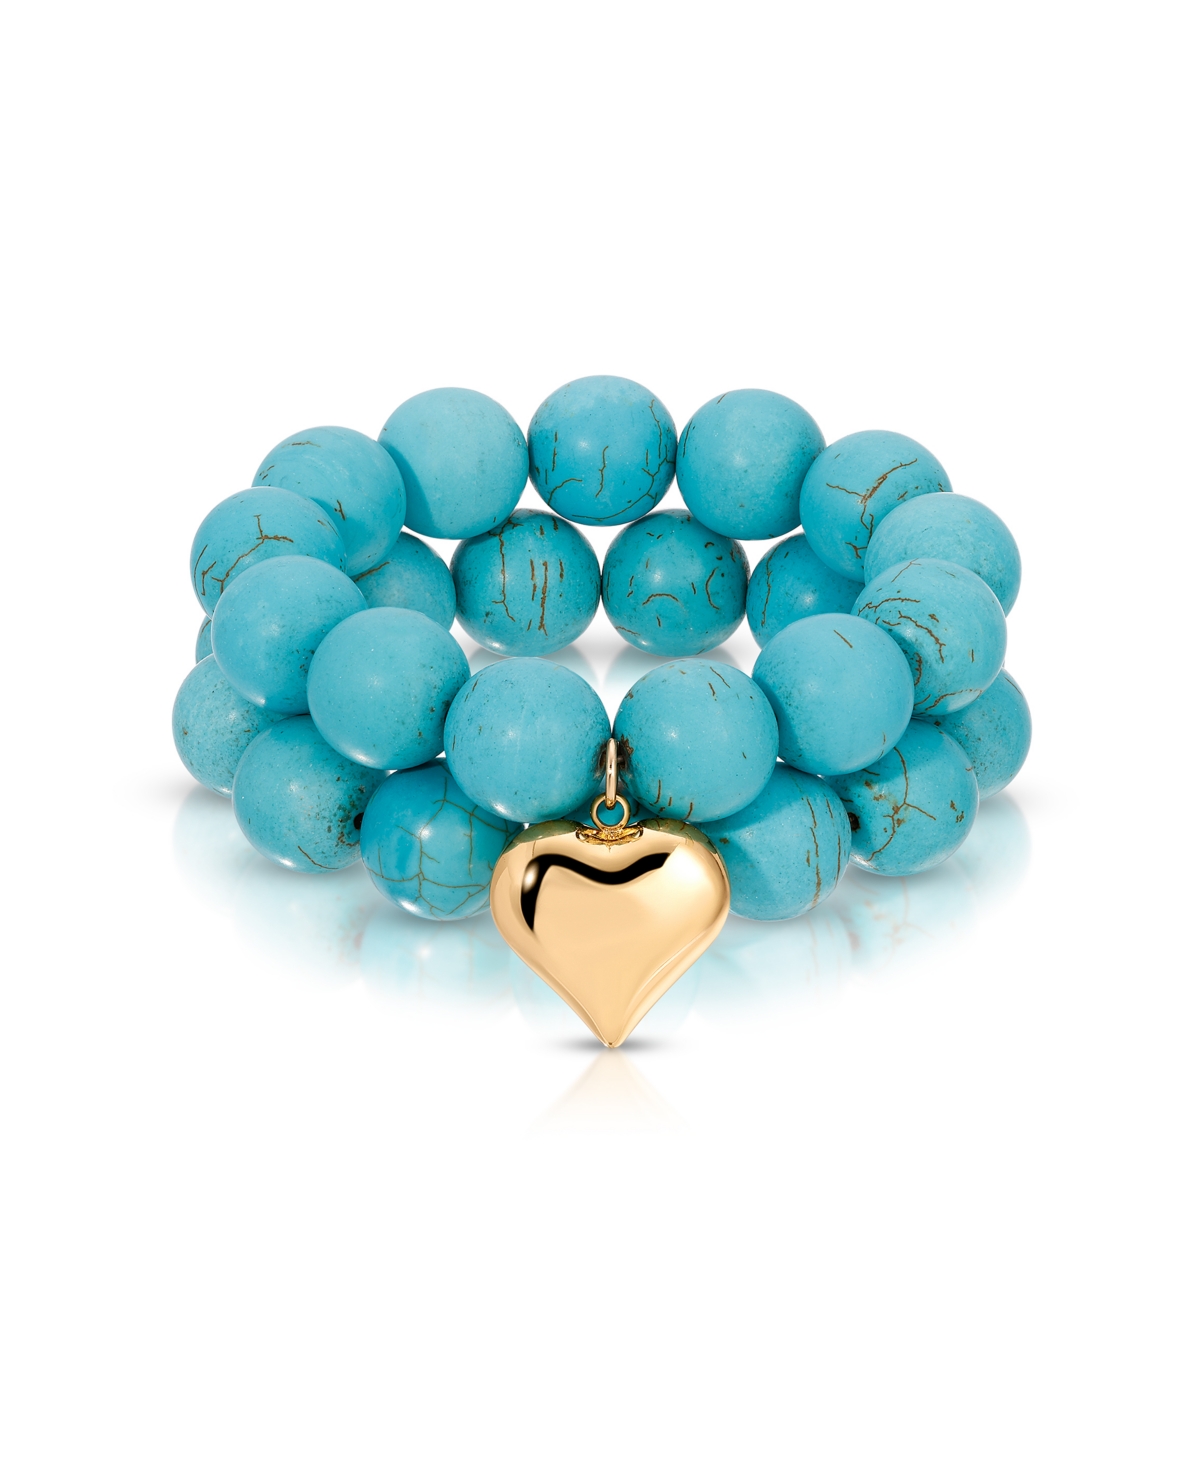 Turquoise and Gold Heart Beaded Elastic Bracelet Set - Turquoise